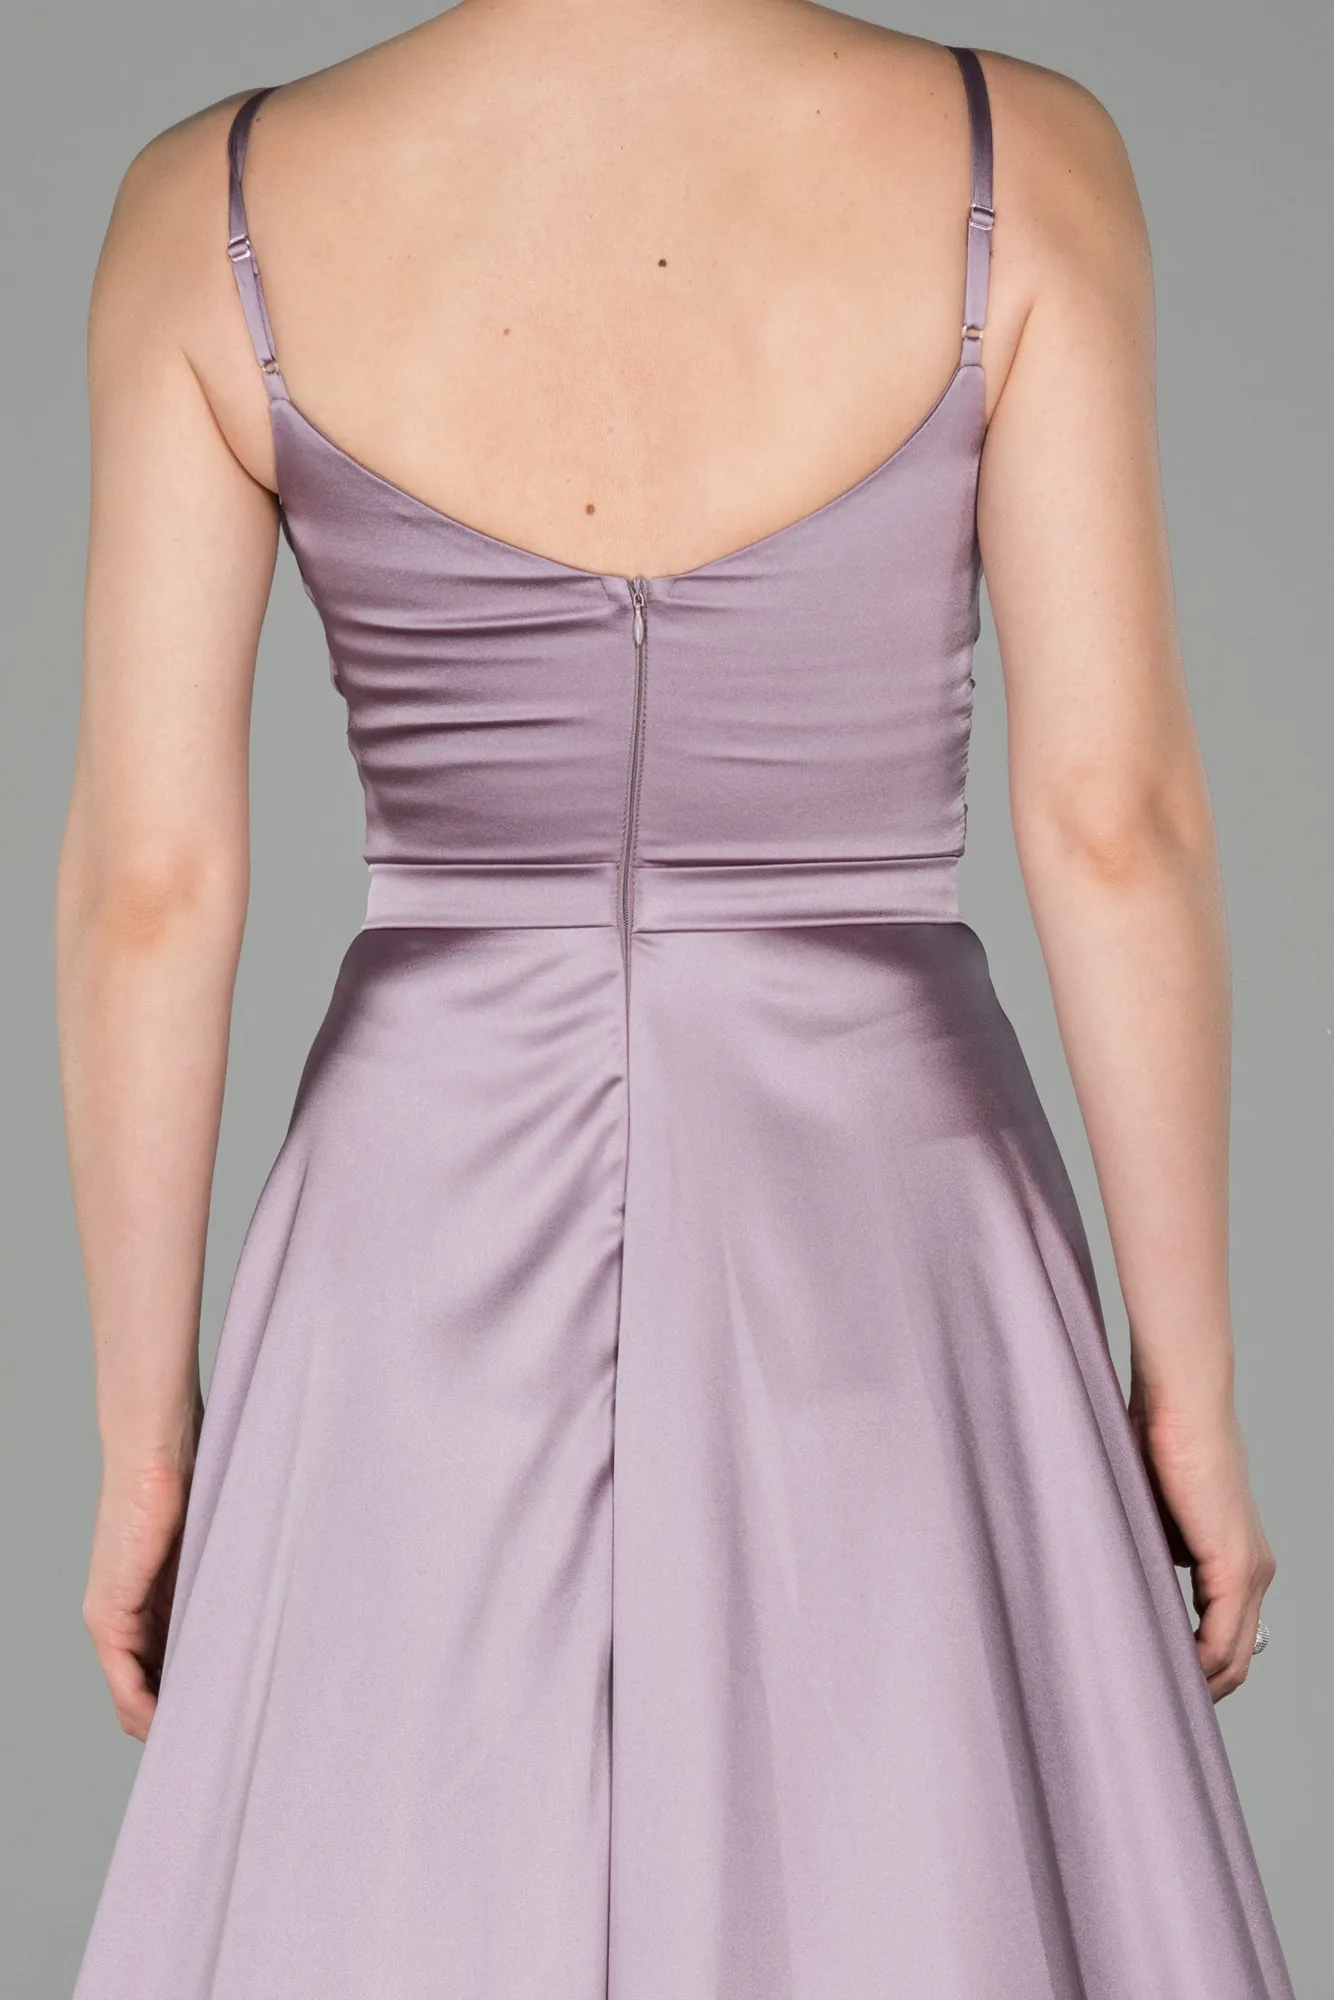 Lavender-Long Satin Evening Dress ABU1601